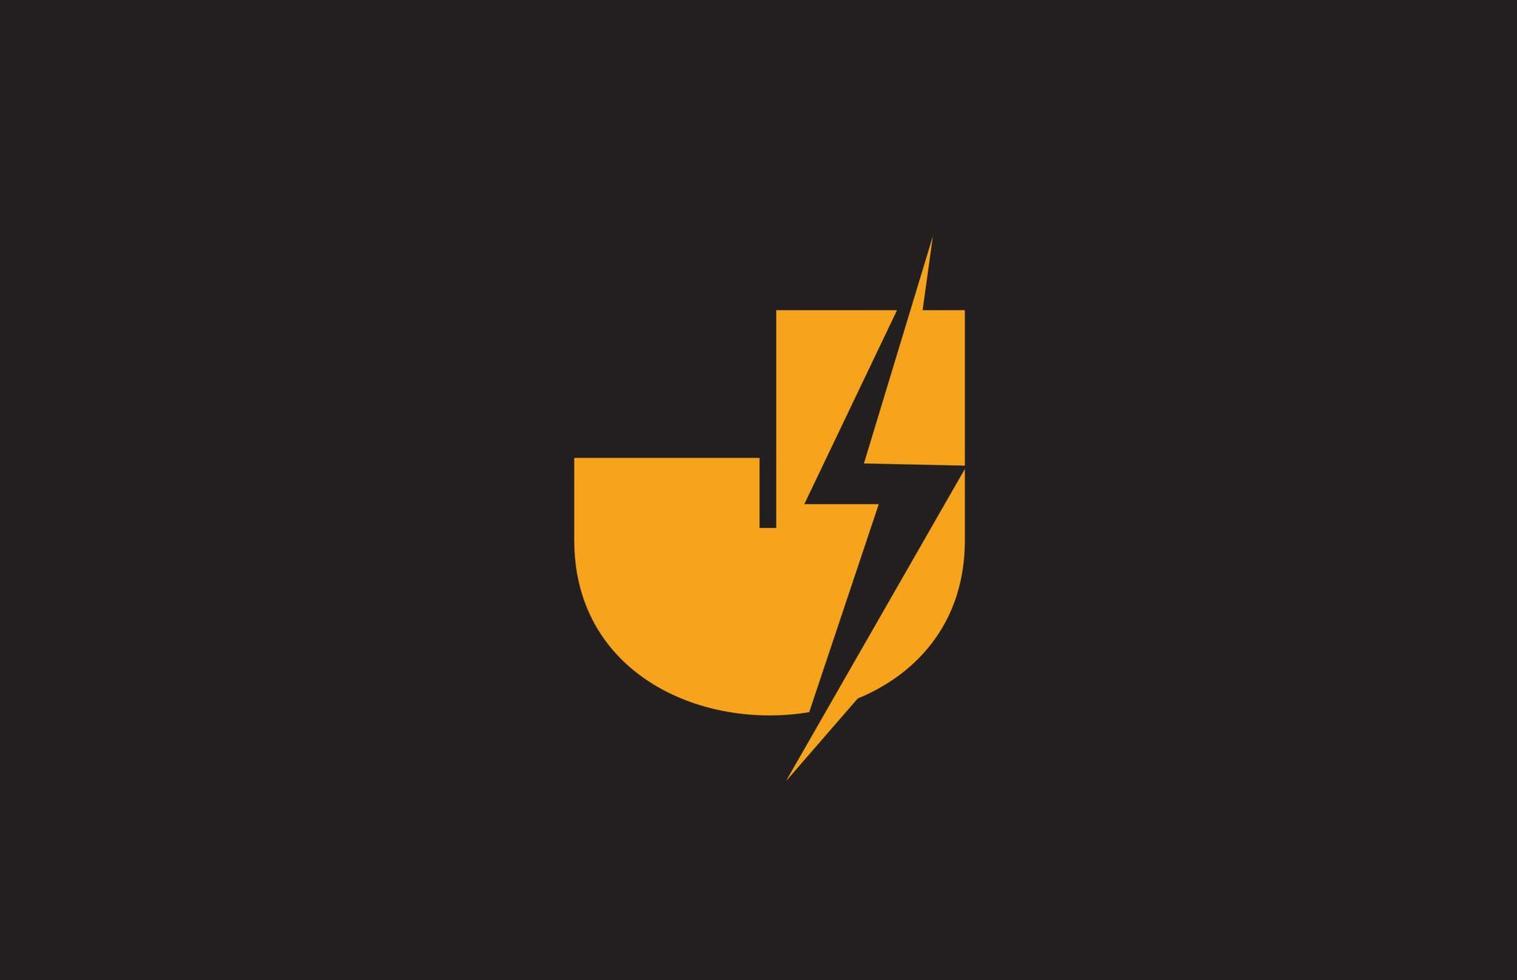 J yellow black alphabet letter logo icon. Electric lightning design for power or energy business vector